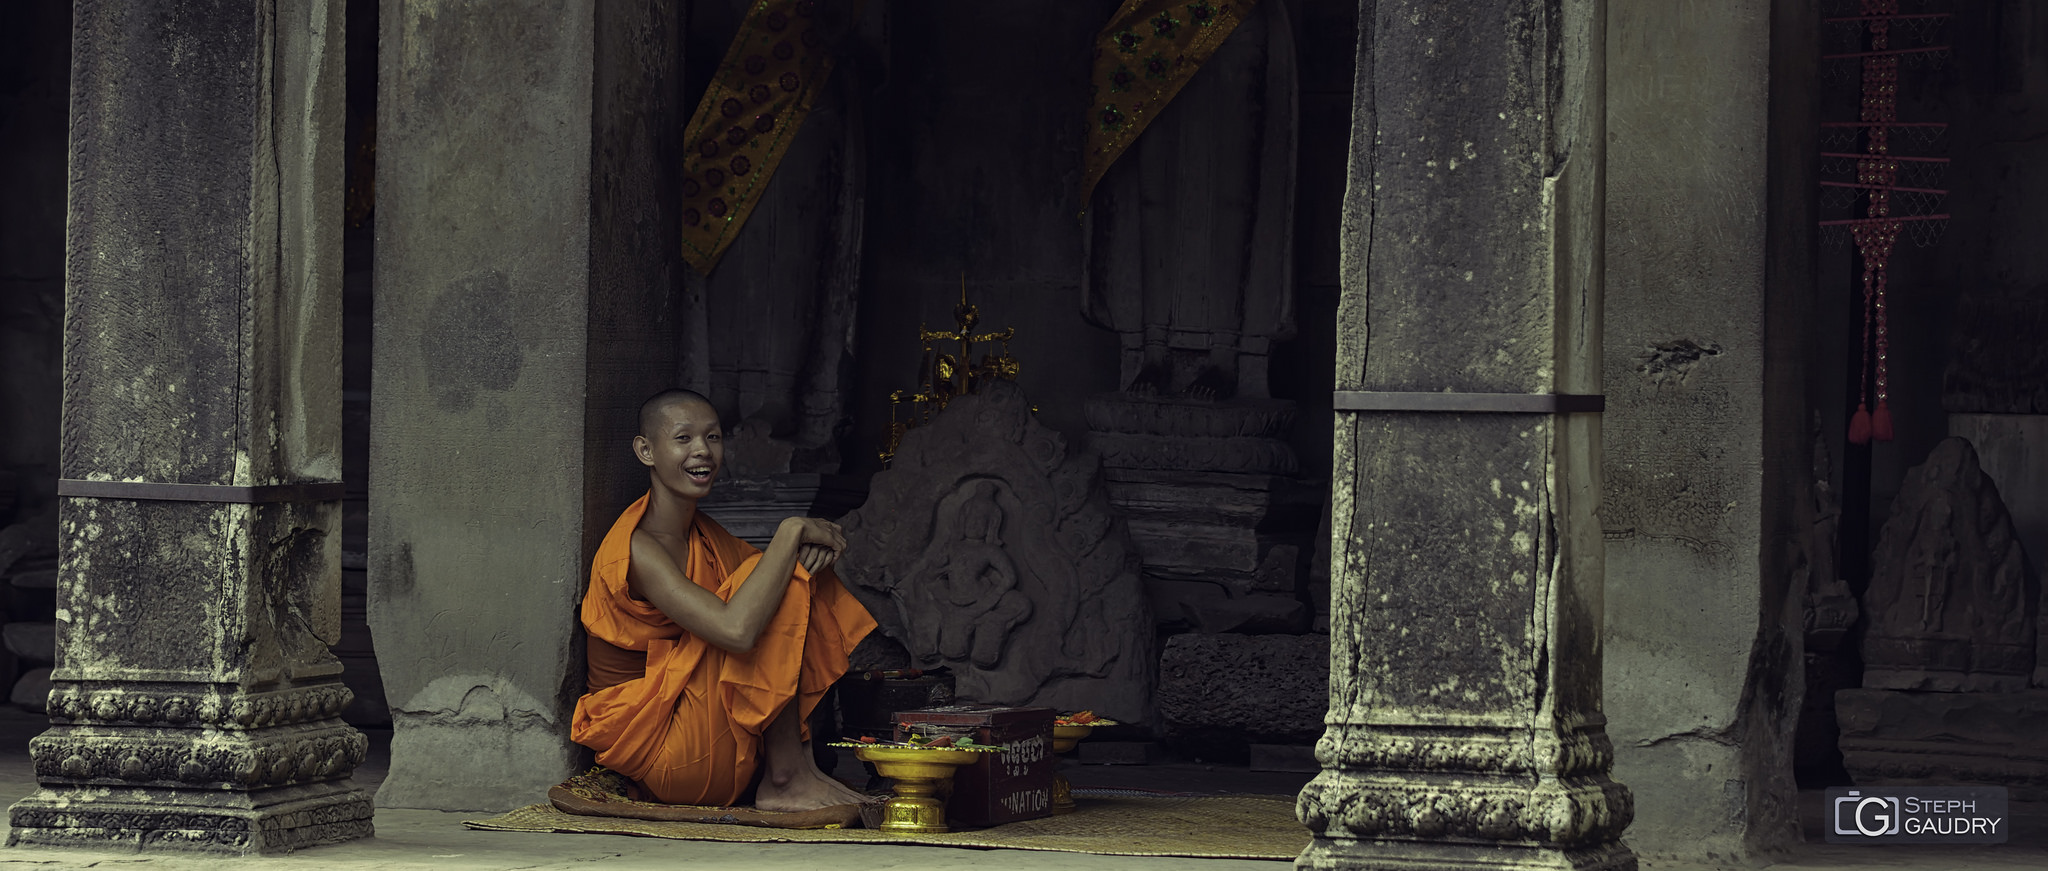 Le sourire du jeune bouddhiste [Klik om de diavoorstelling te starten]